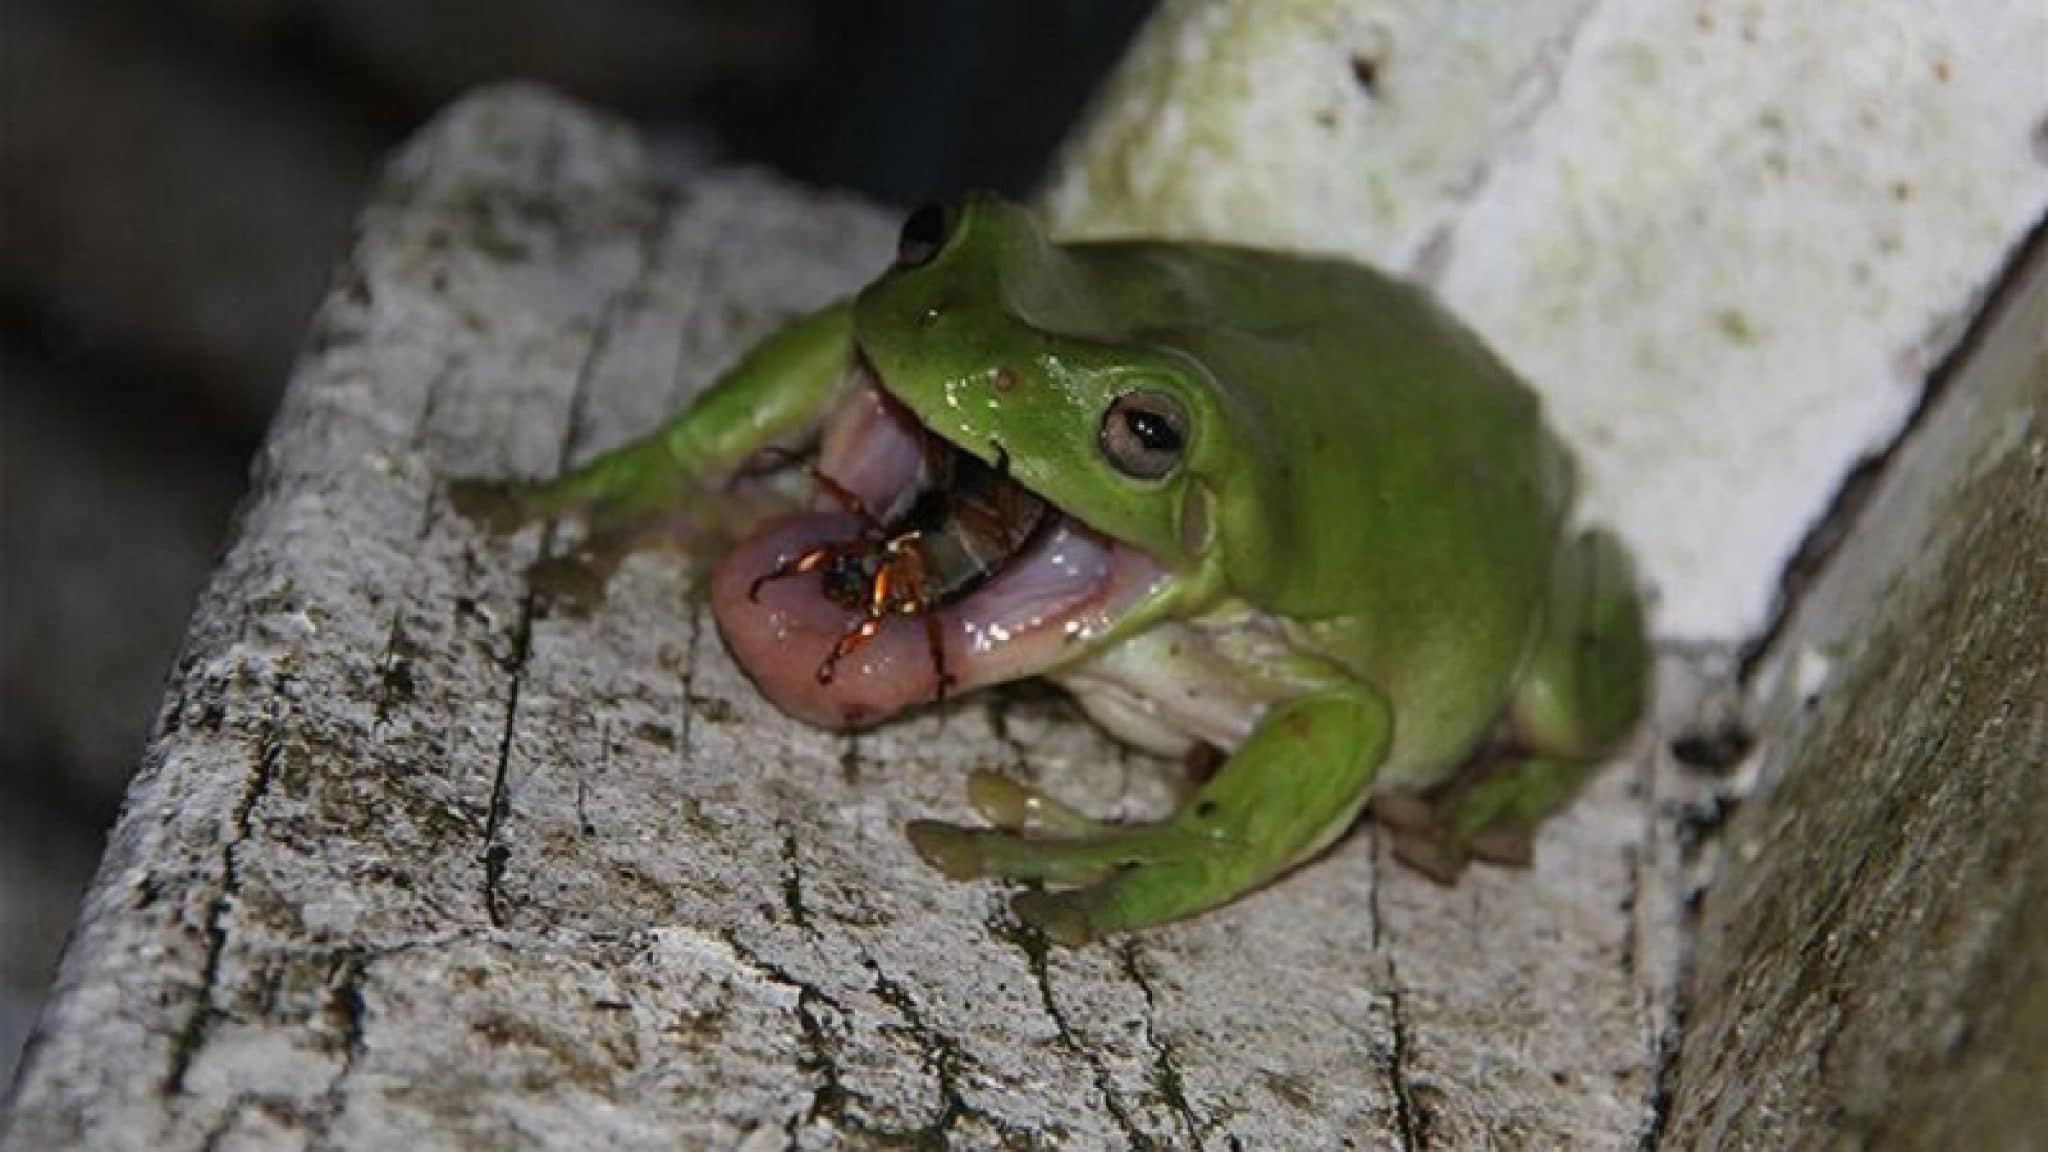 peculiar traits of purple tree frog